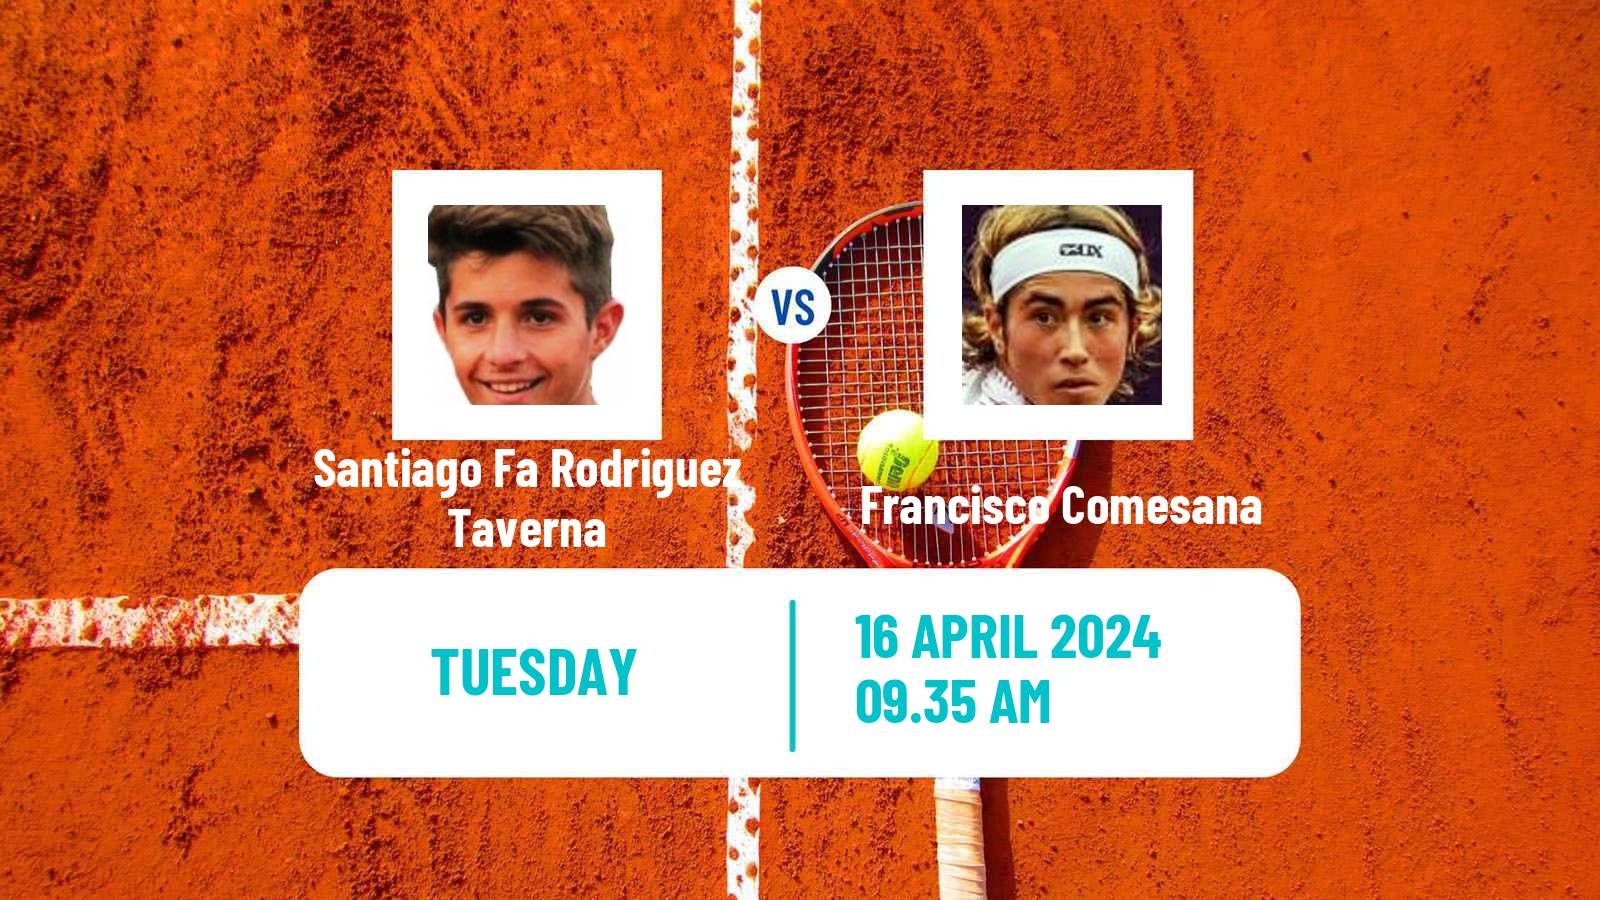 Tennis Oeiras 3 Challenger Men Santiago Fa Rodriguez Taverna - Francisco Comesana